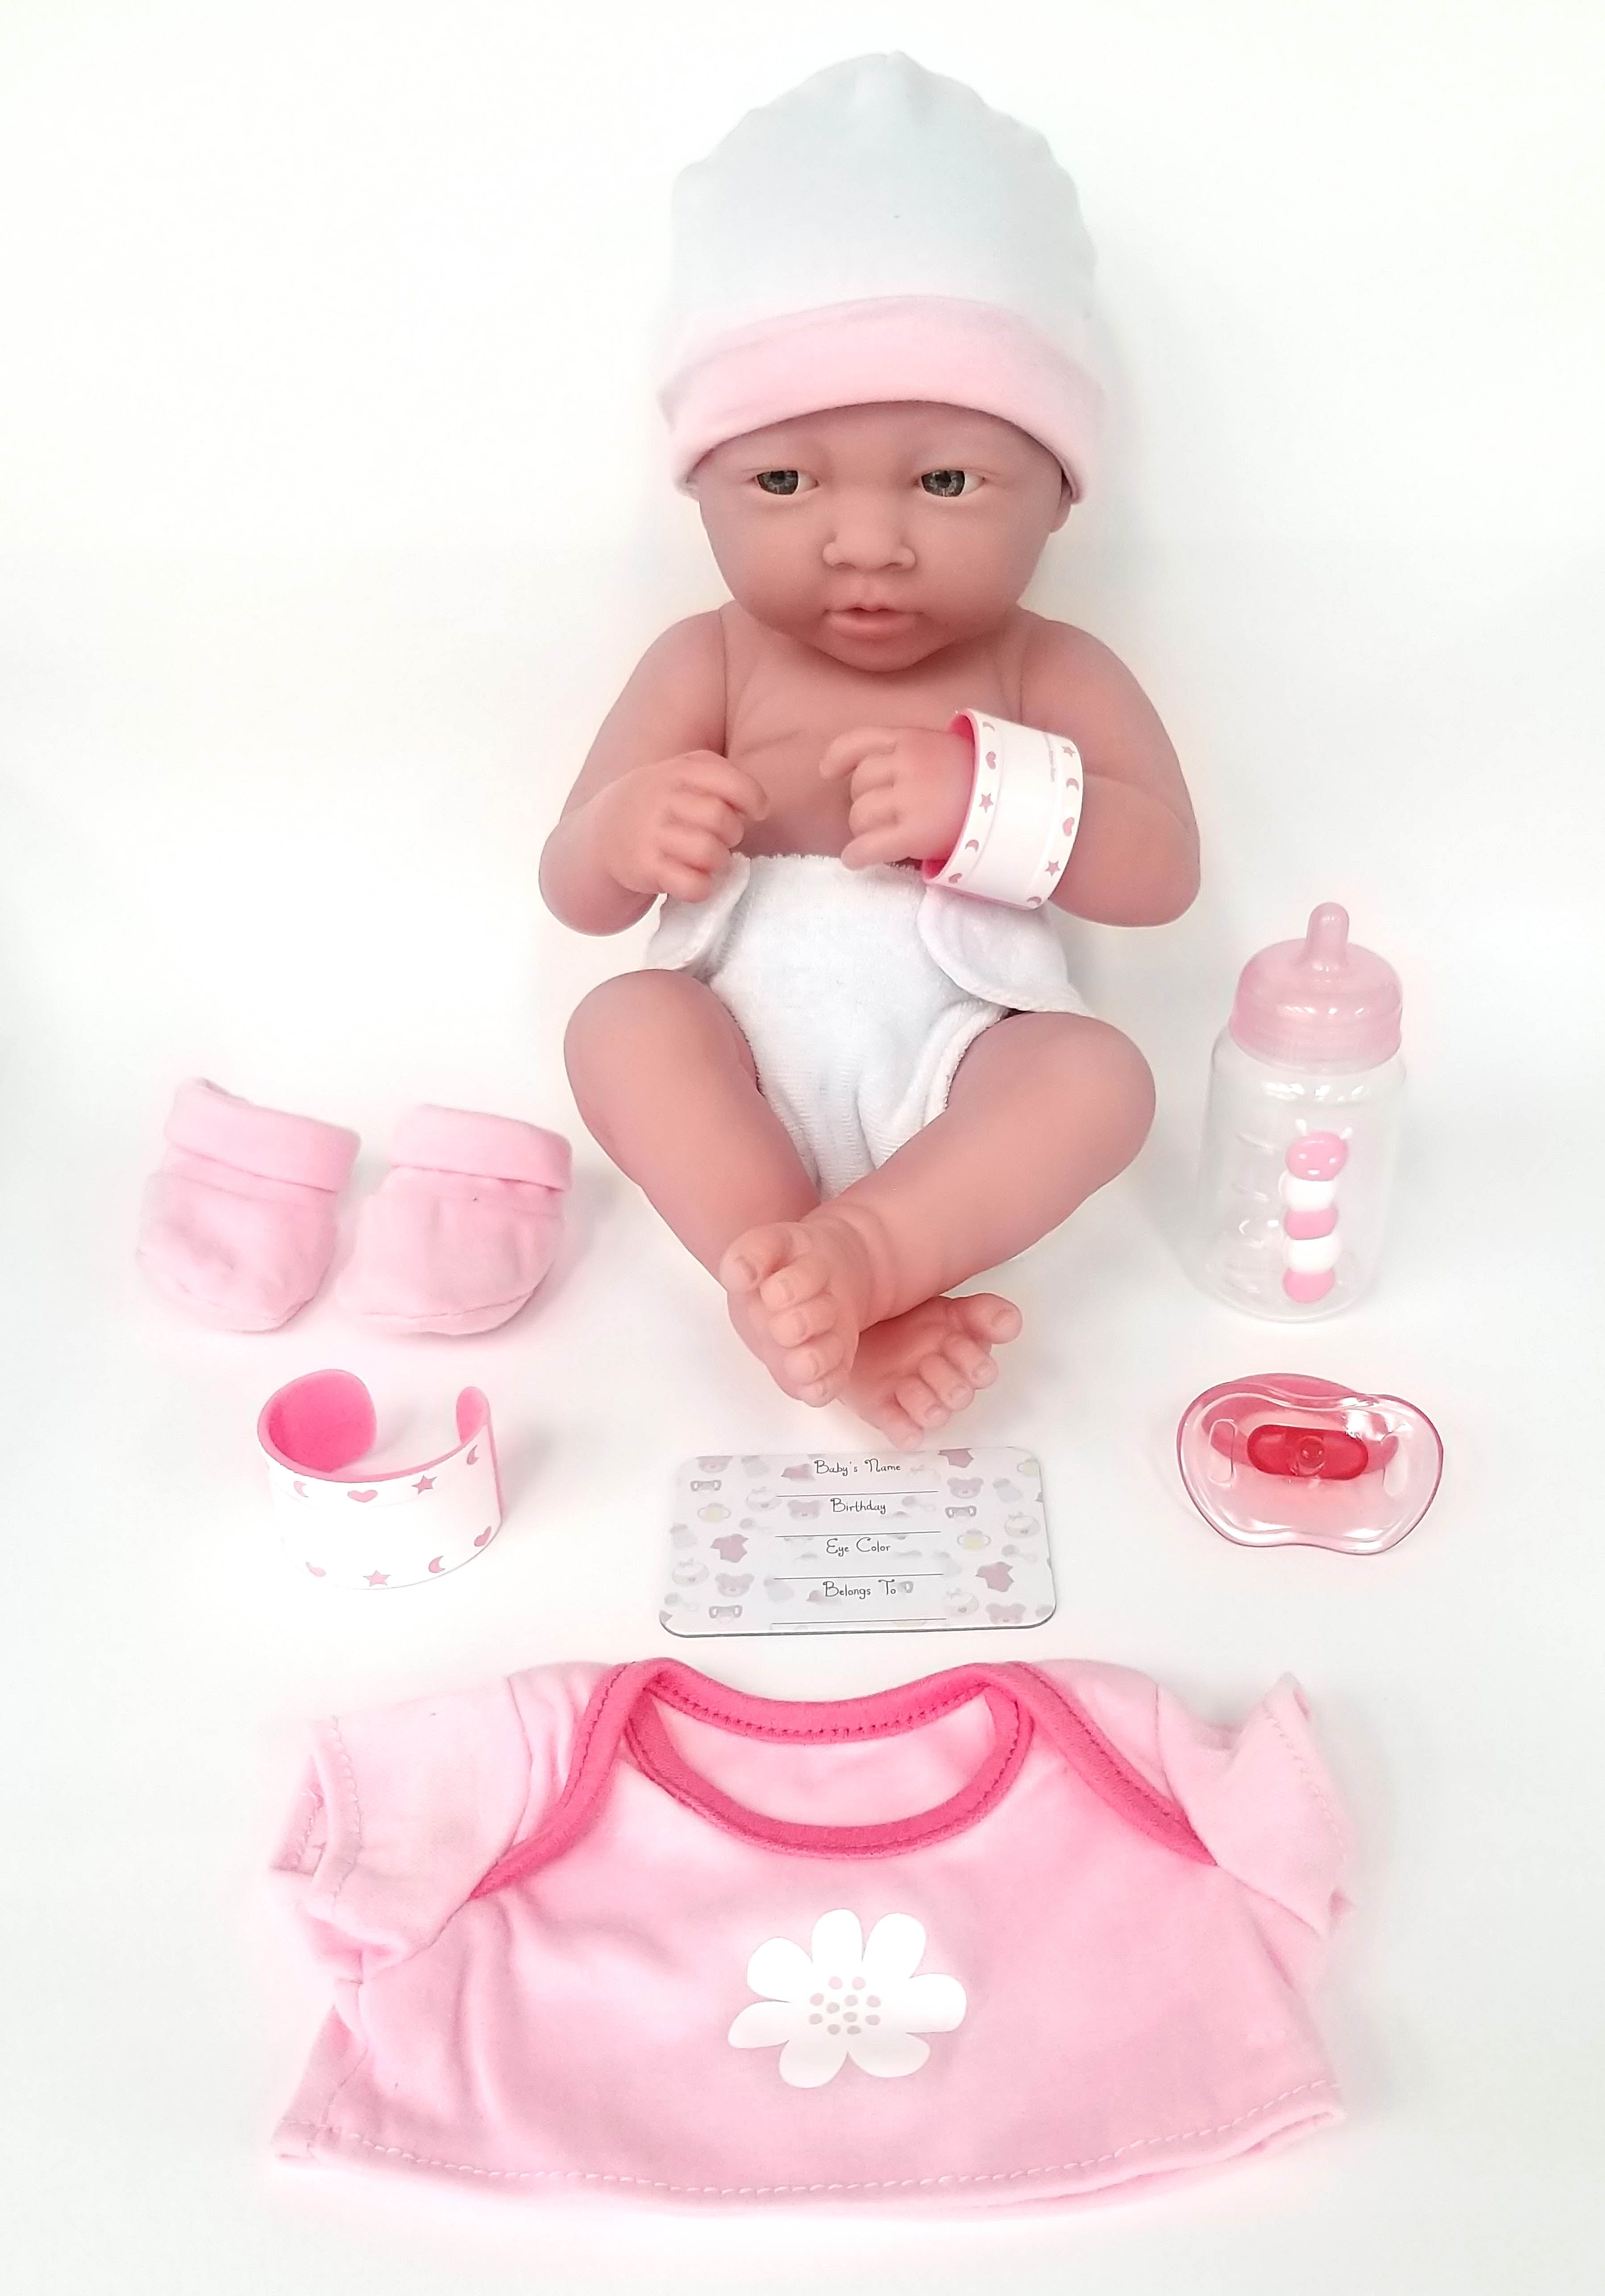 Baby dolls clothes handmade to fit La newborn 14 inch 